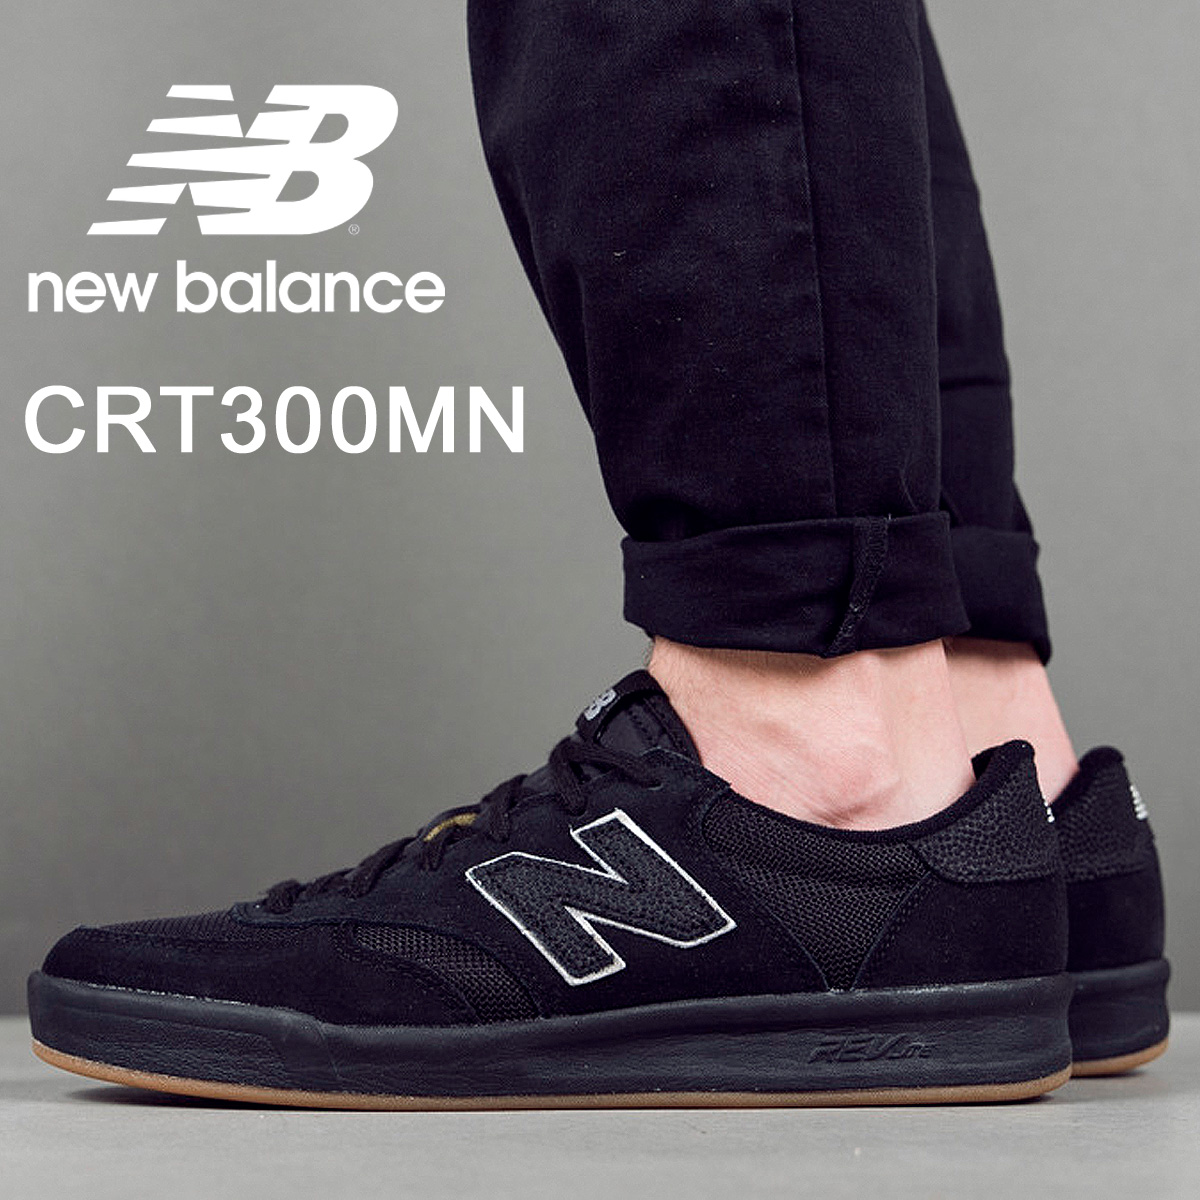 nb300 new balance